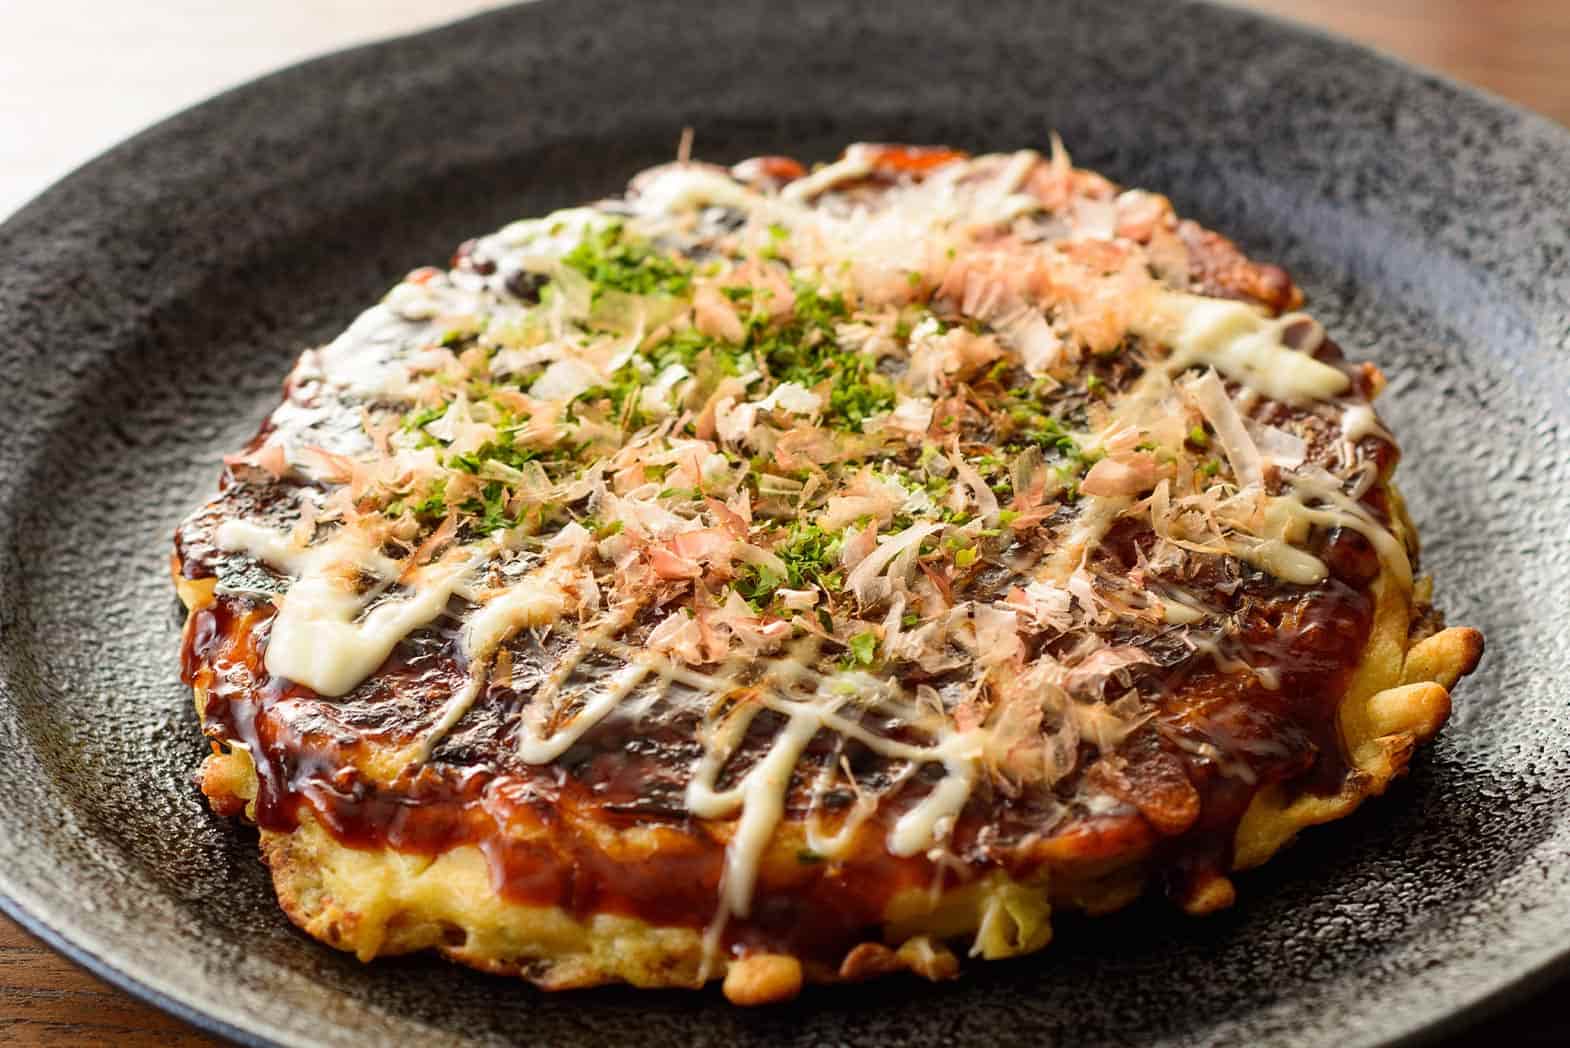 KIT per Okonomiyaki